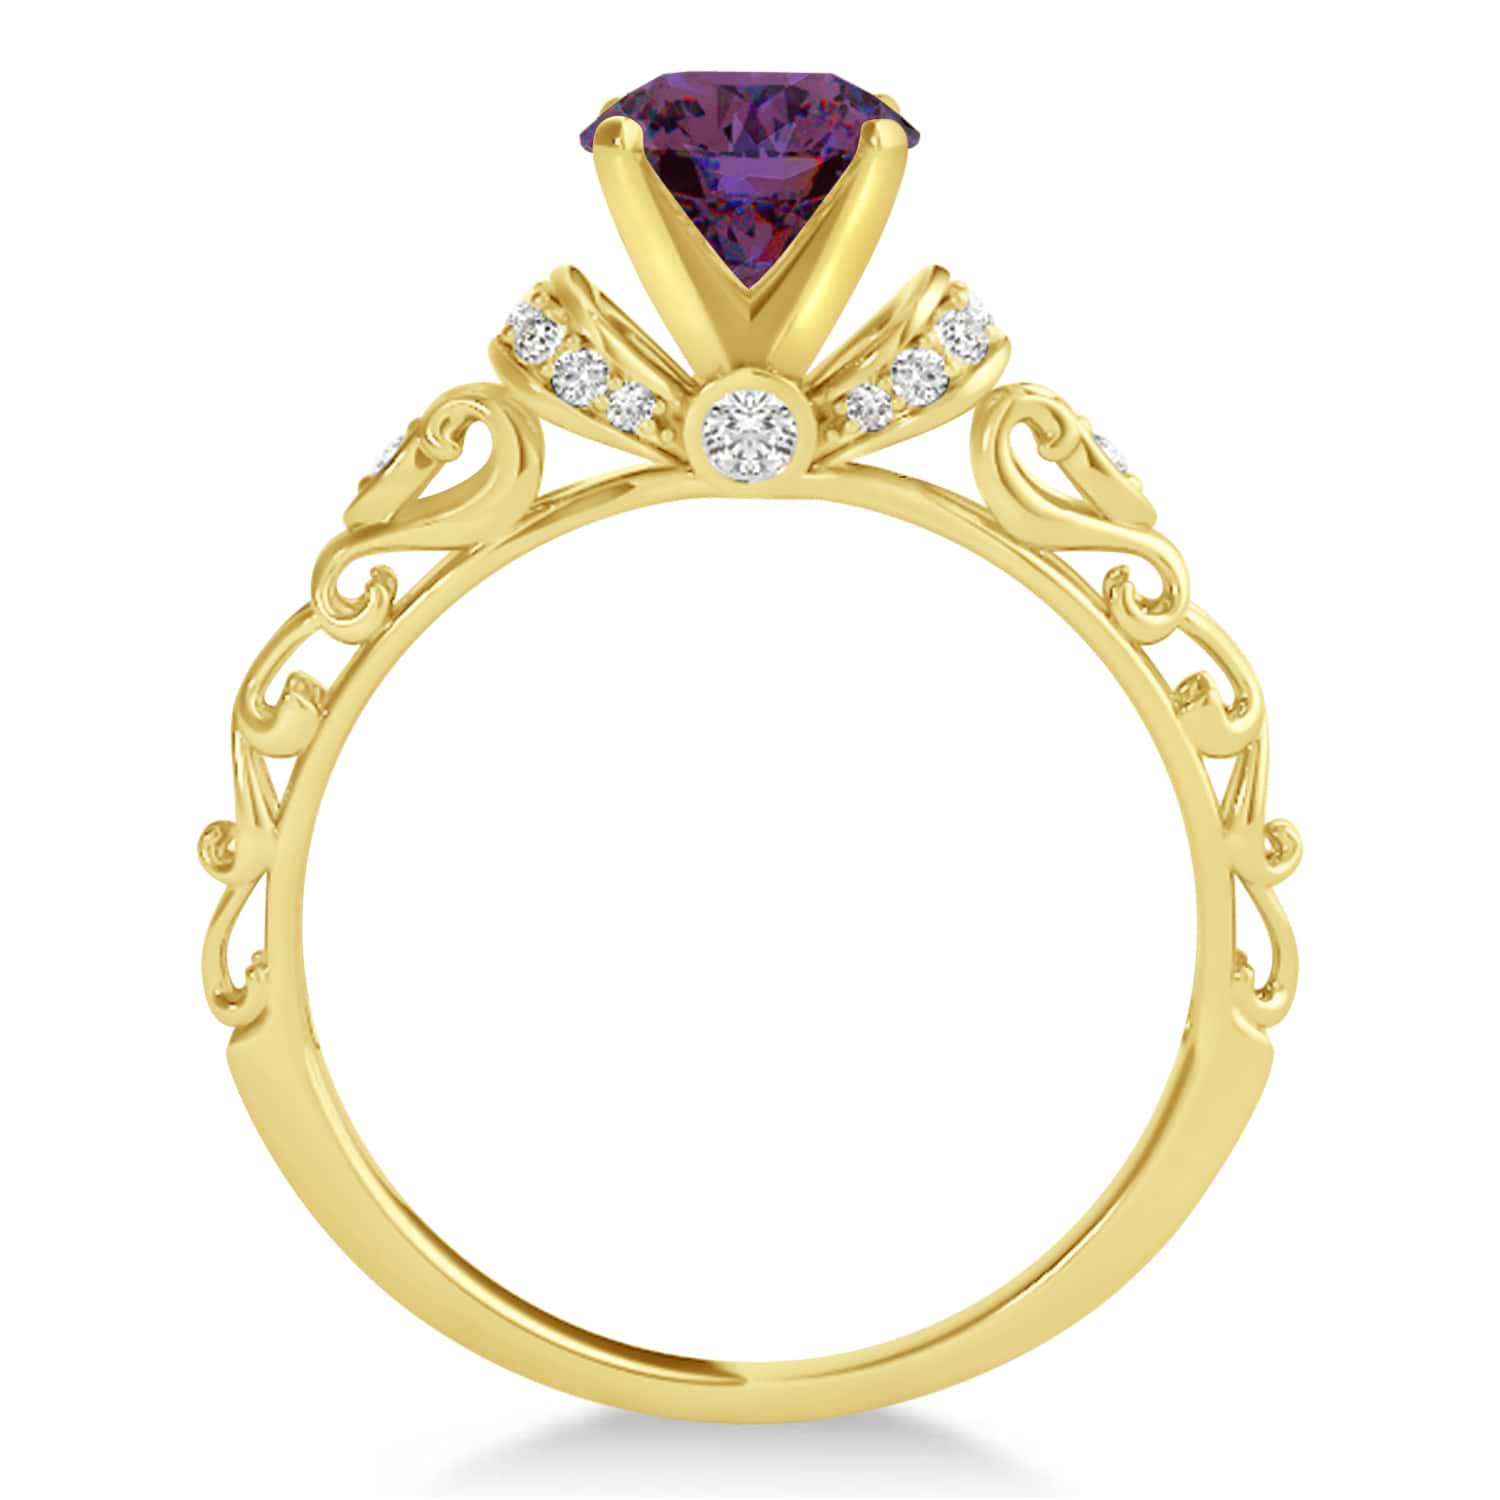 Lab Alexandrite & Diamond Antique Engagement Ring 14k Yellow Gold (0.87ct)